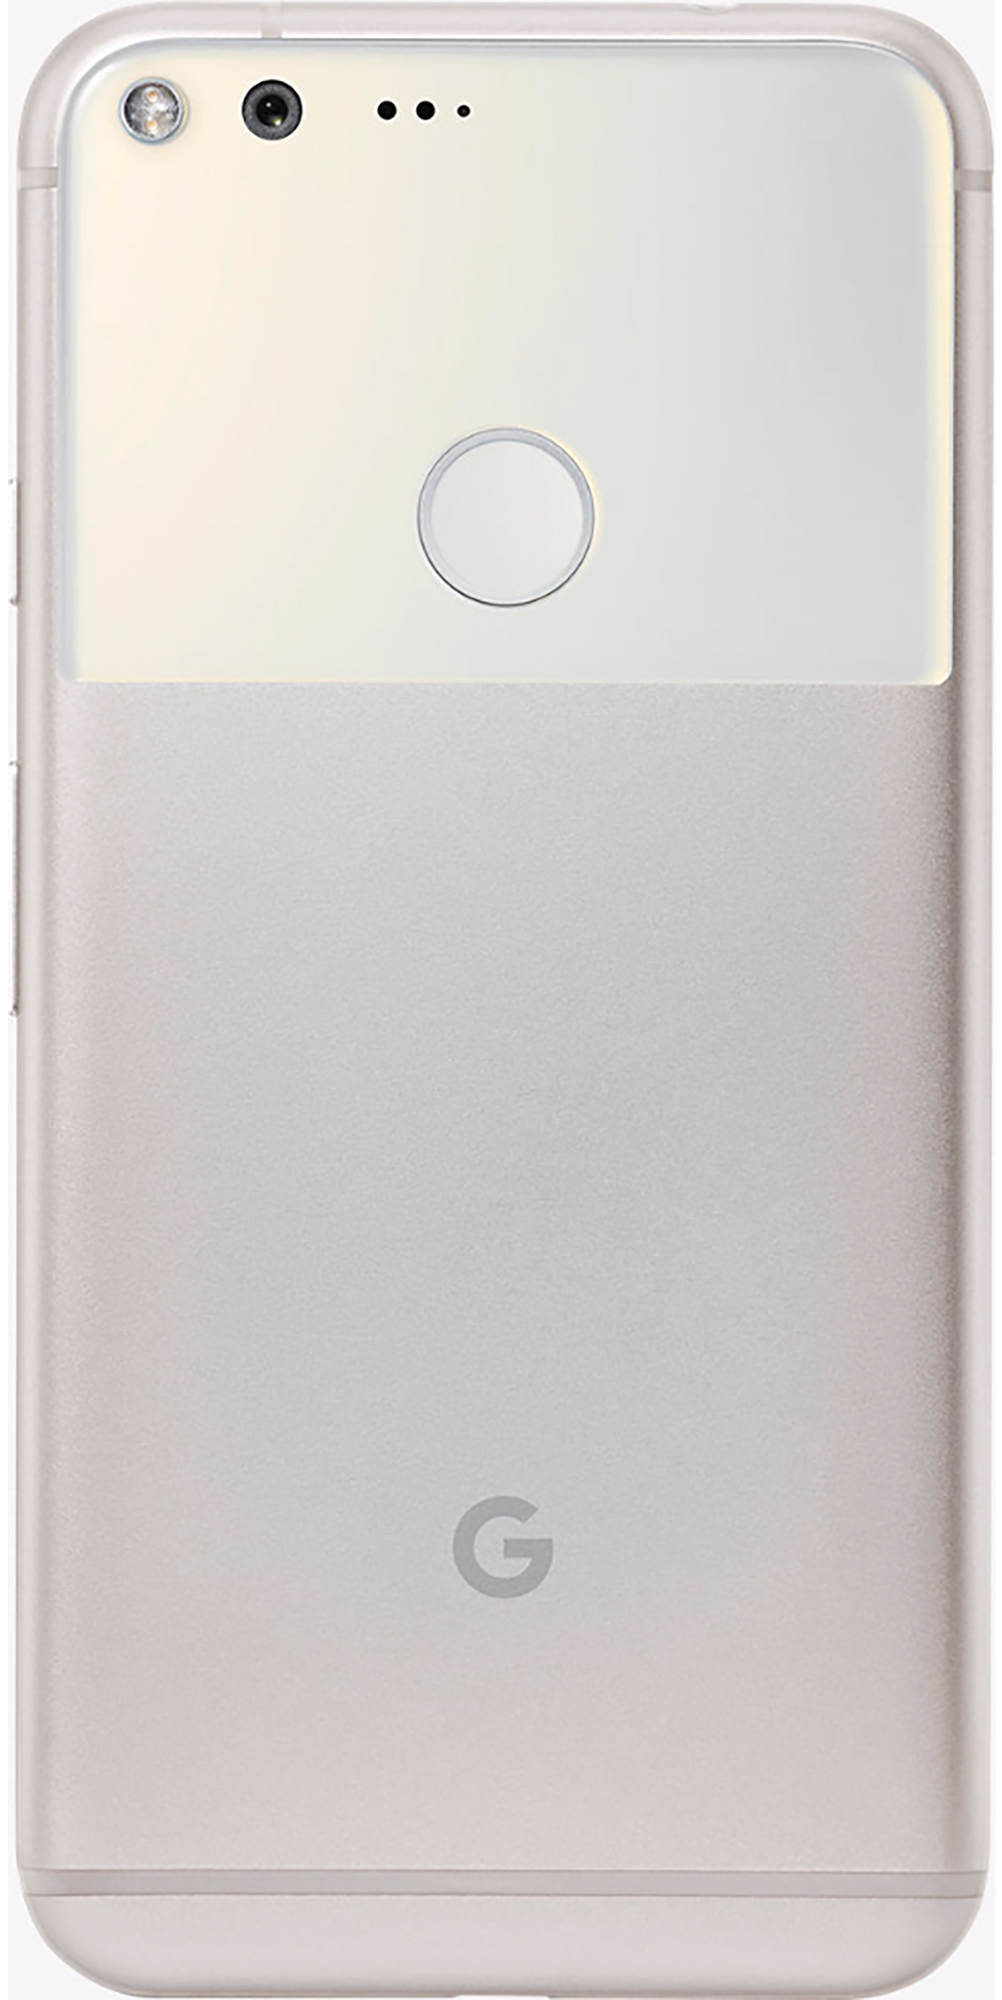 Google Pixel 32GB Unlocked GSM Phone w/ 12.3MP Camera - Very Silver - image 2 of 3